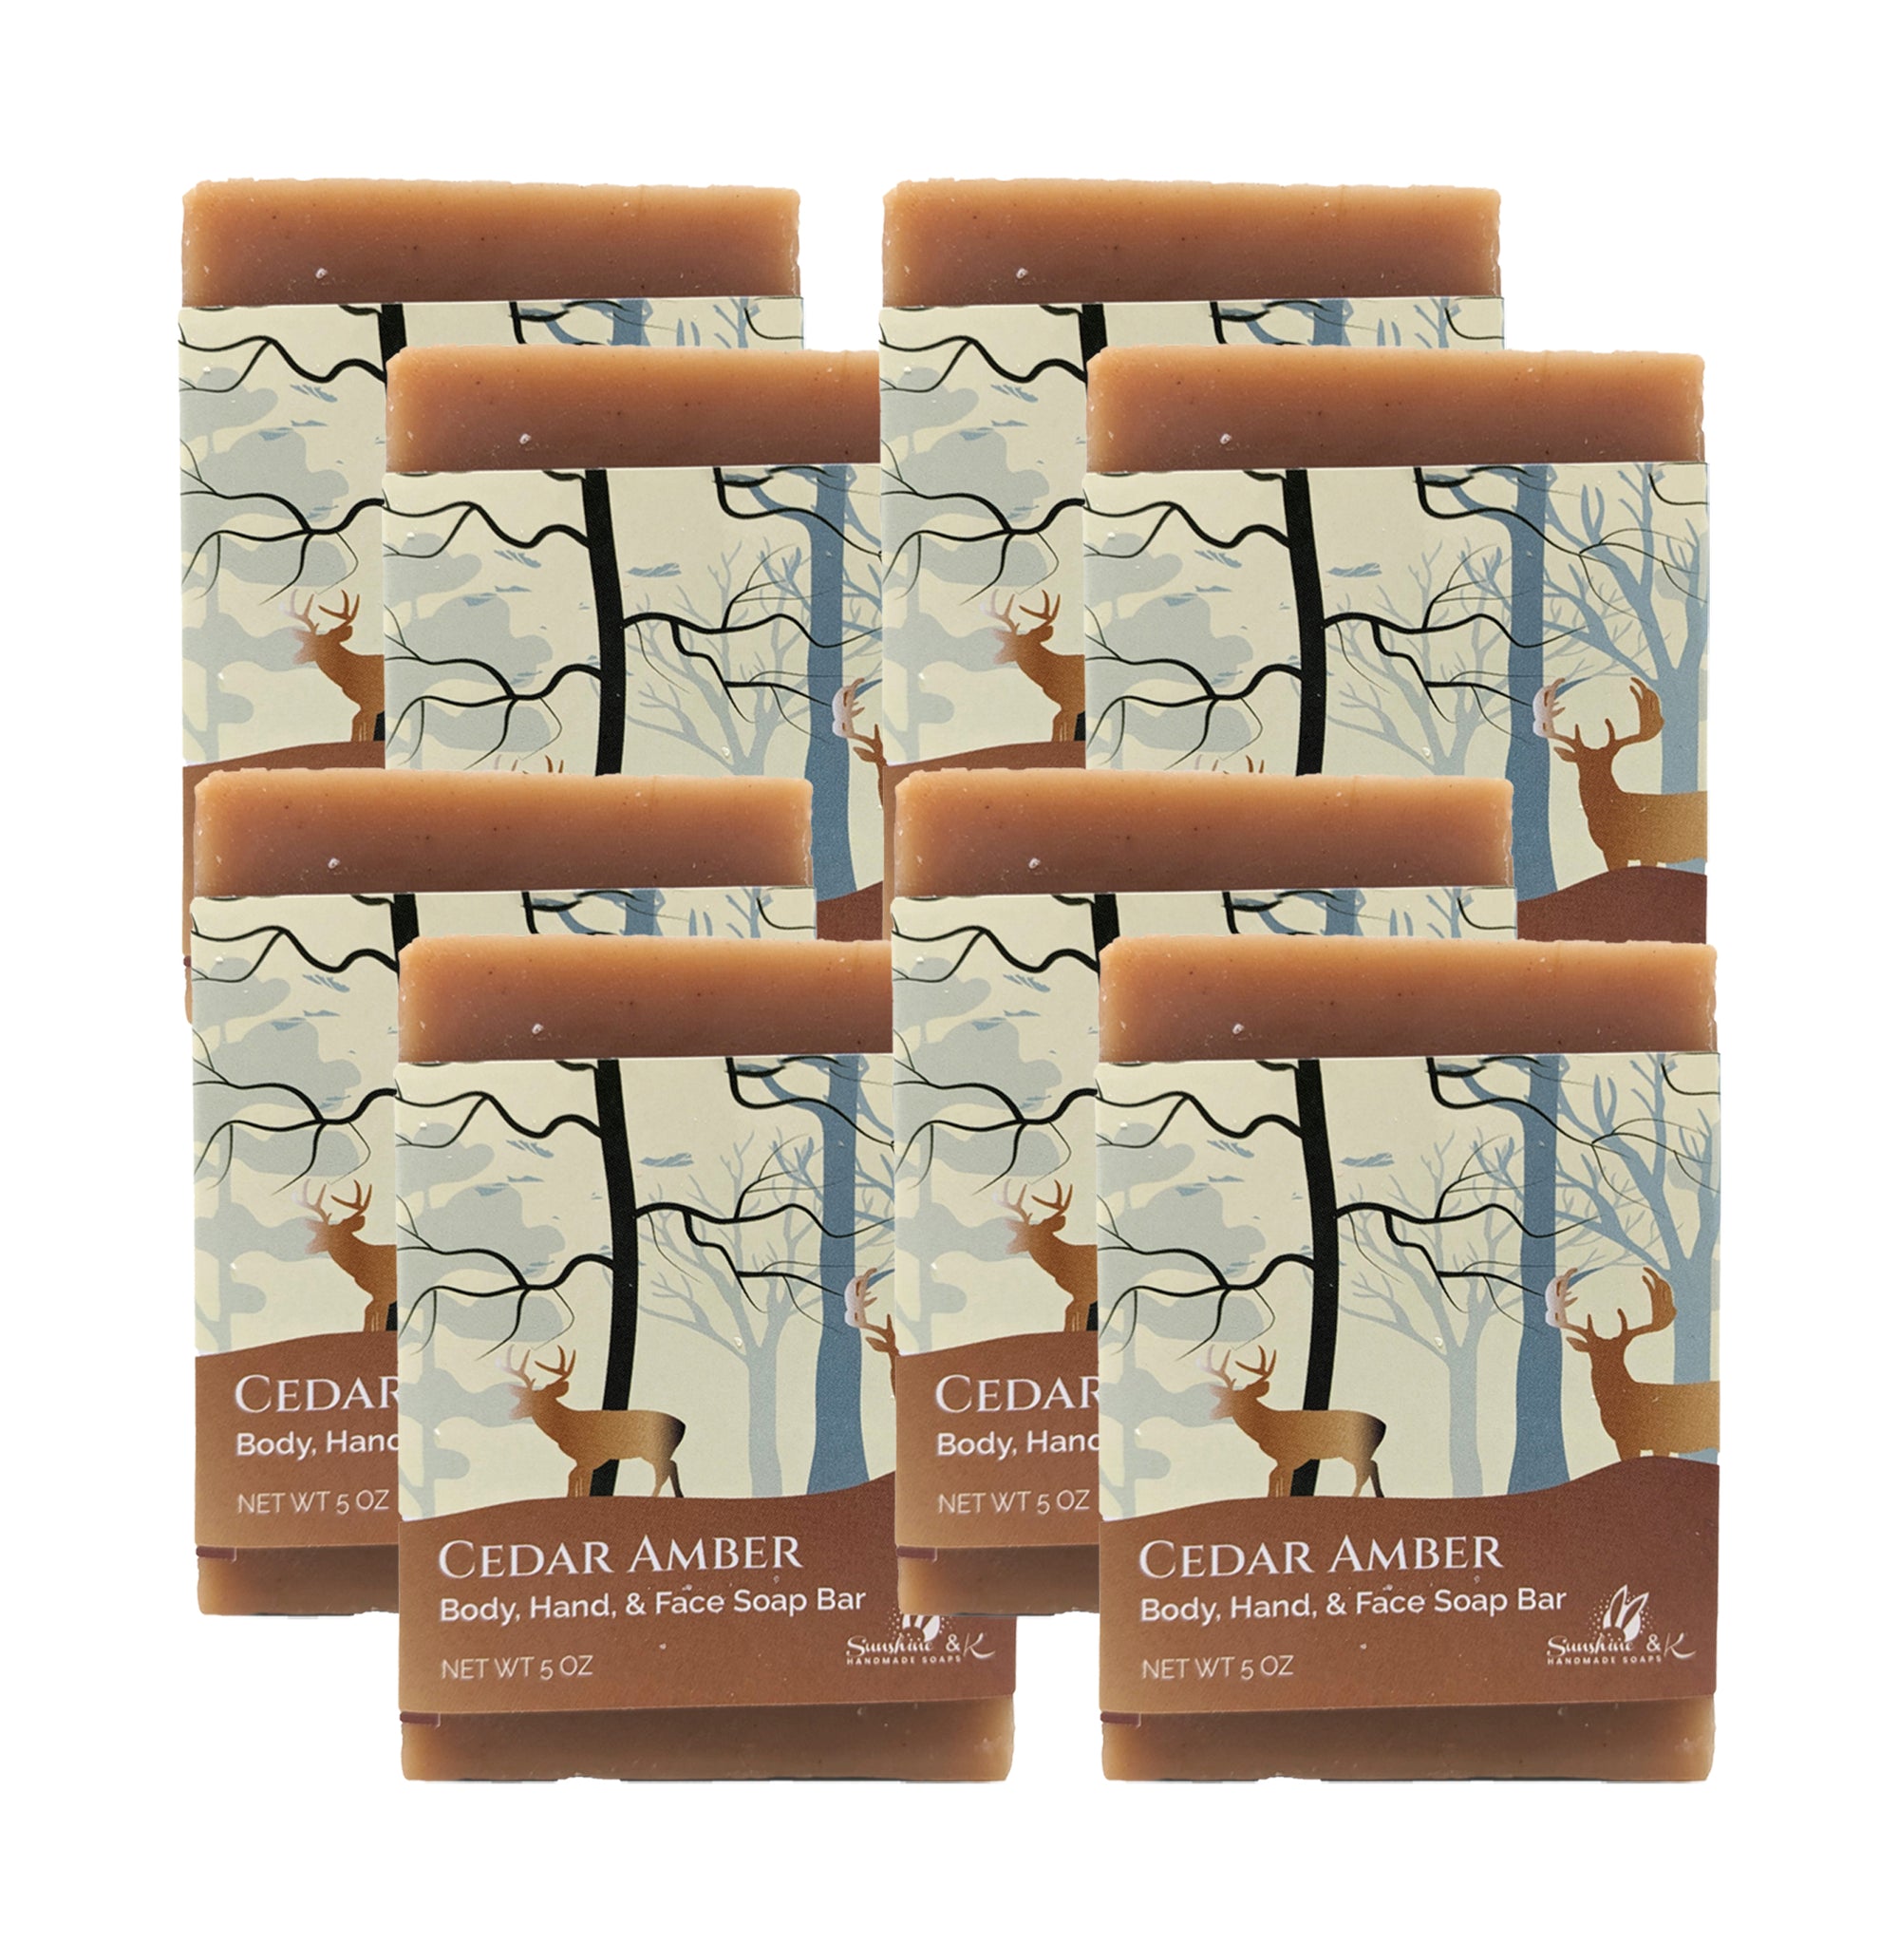 Cedar Amber Soap Bar - Body & Face Bar Soap, Handmade Bath Soap, Moisturizing Bar Soap With Beeswax, Rice Bran Oil, & Natural Base Oils, Natural Soap Bars, 5 oz, Sunshine & K Handmade Soaps